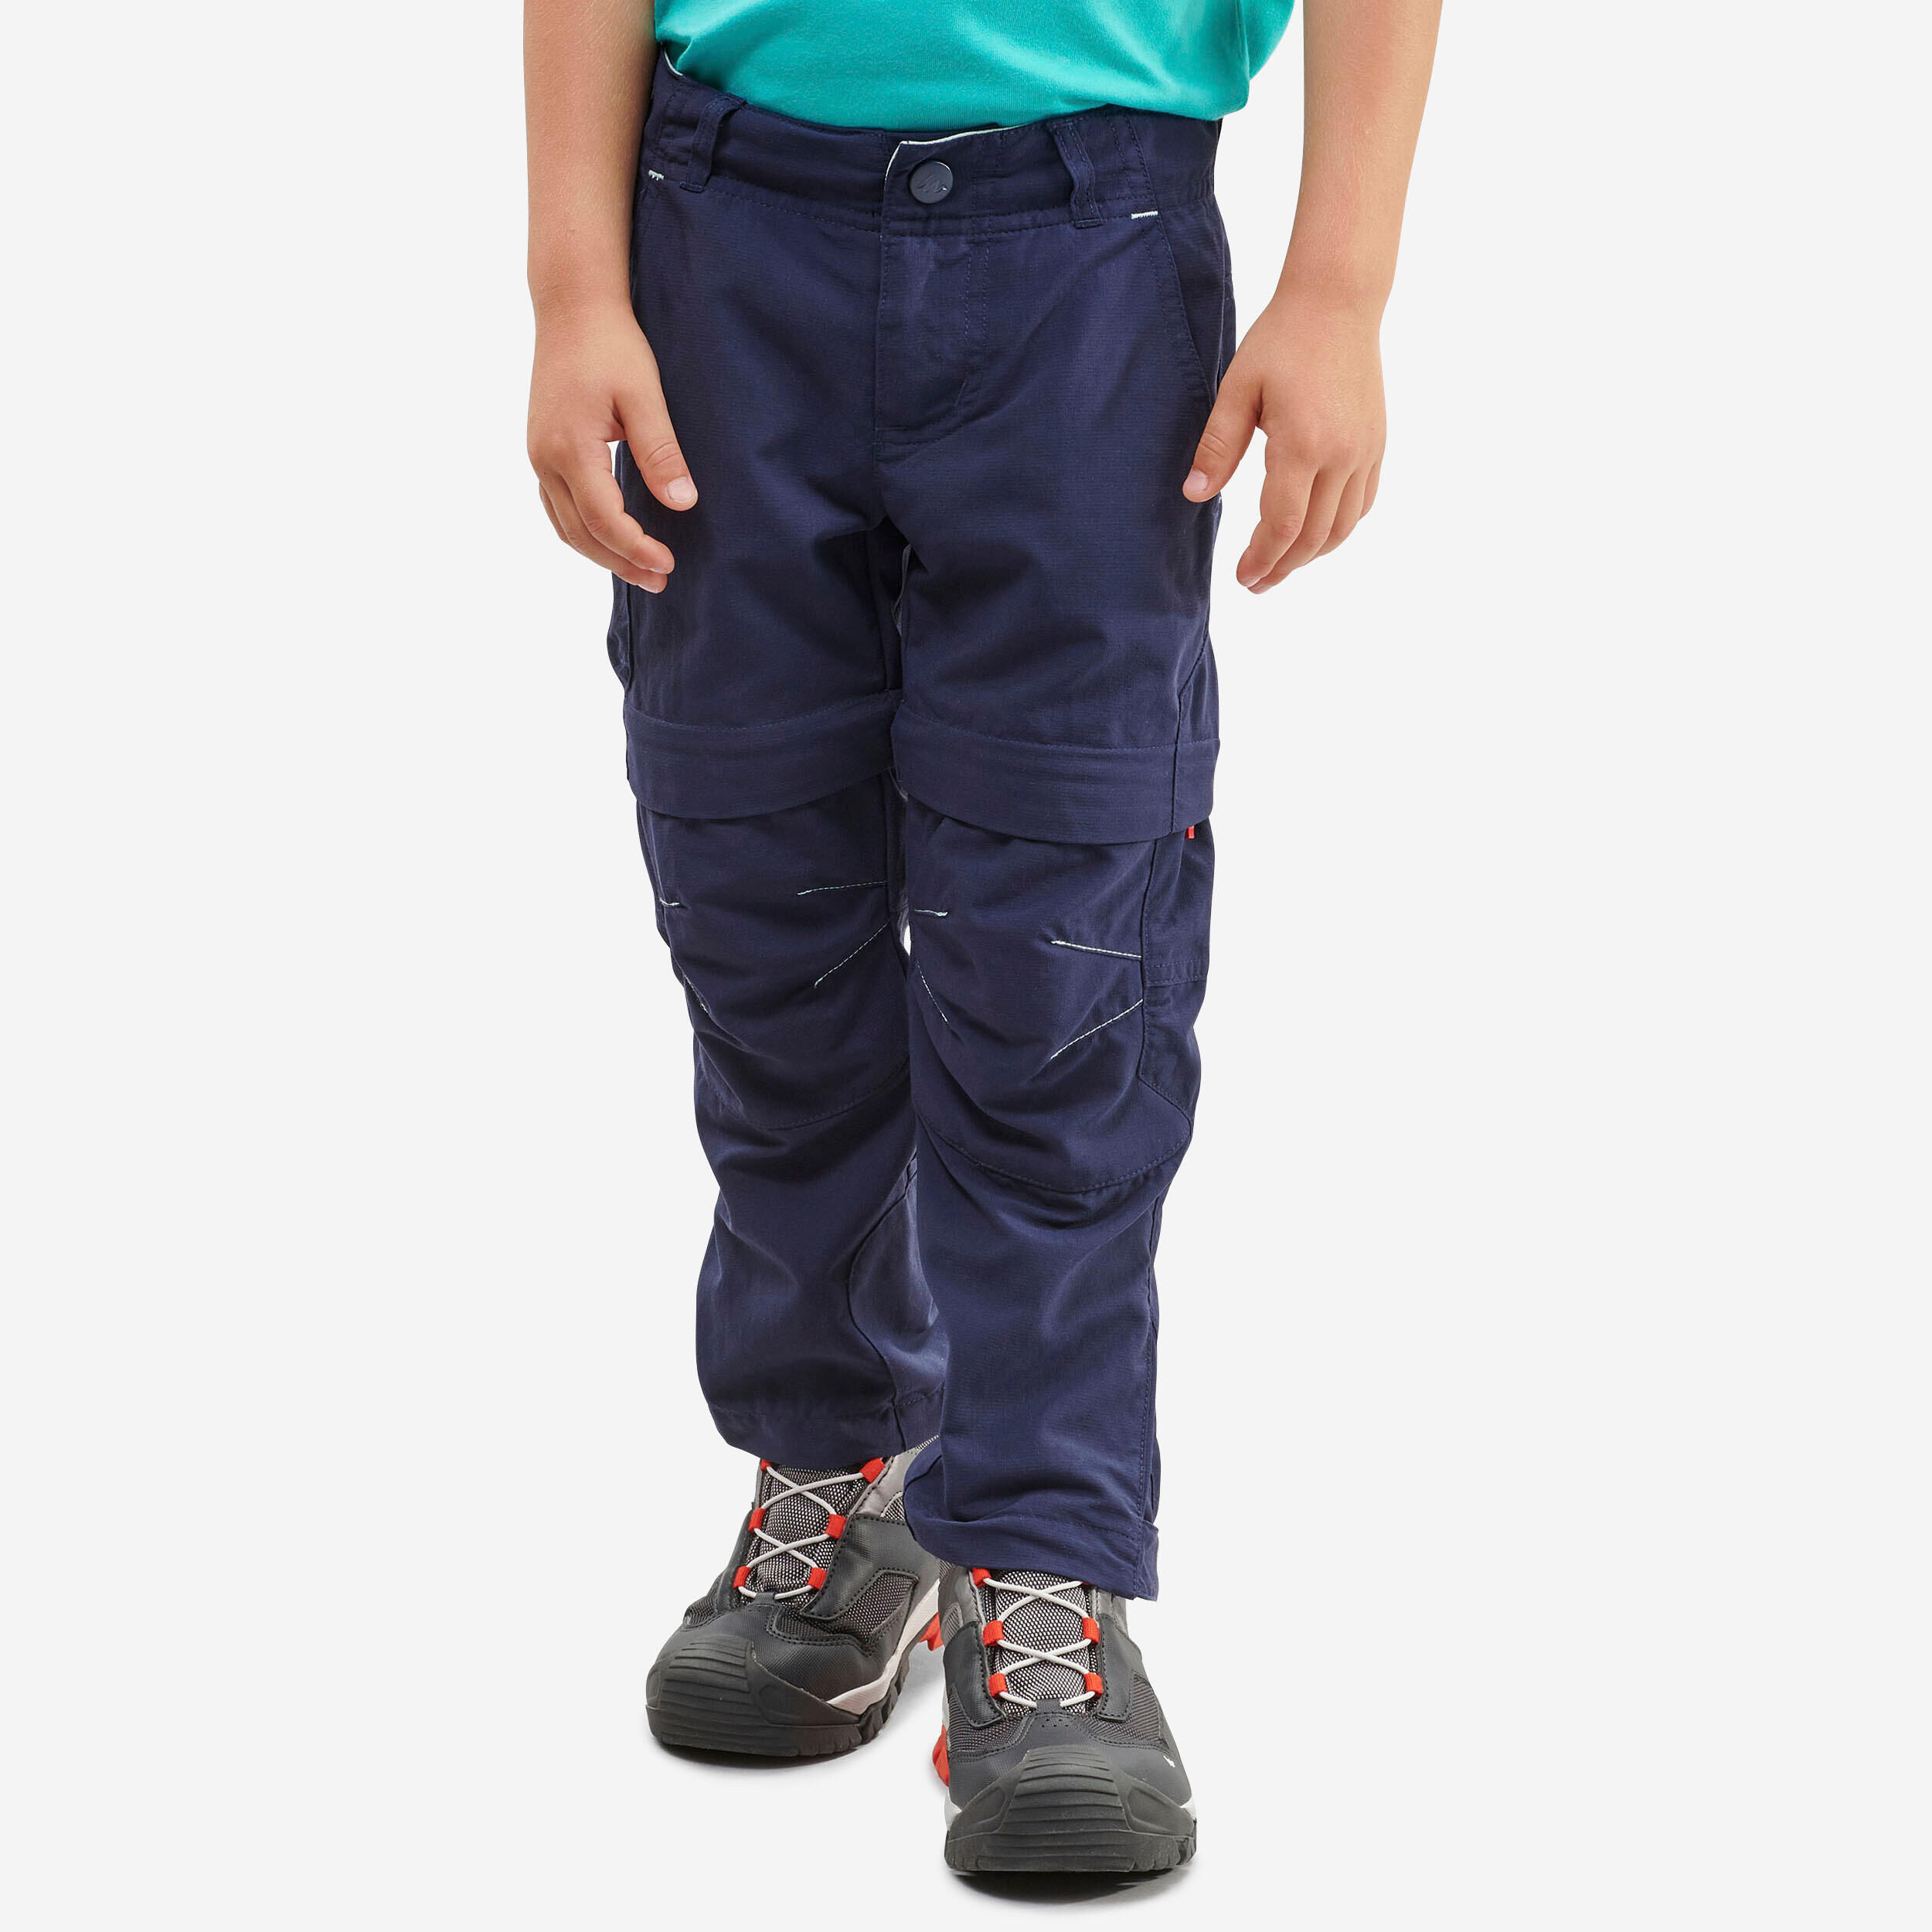 QUECHUA Children's Modular hiking trousers - MH500 KID blue - 2-6 years